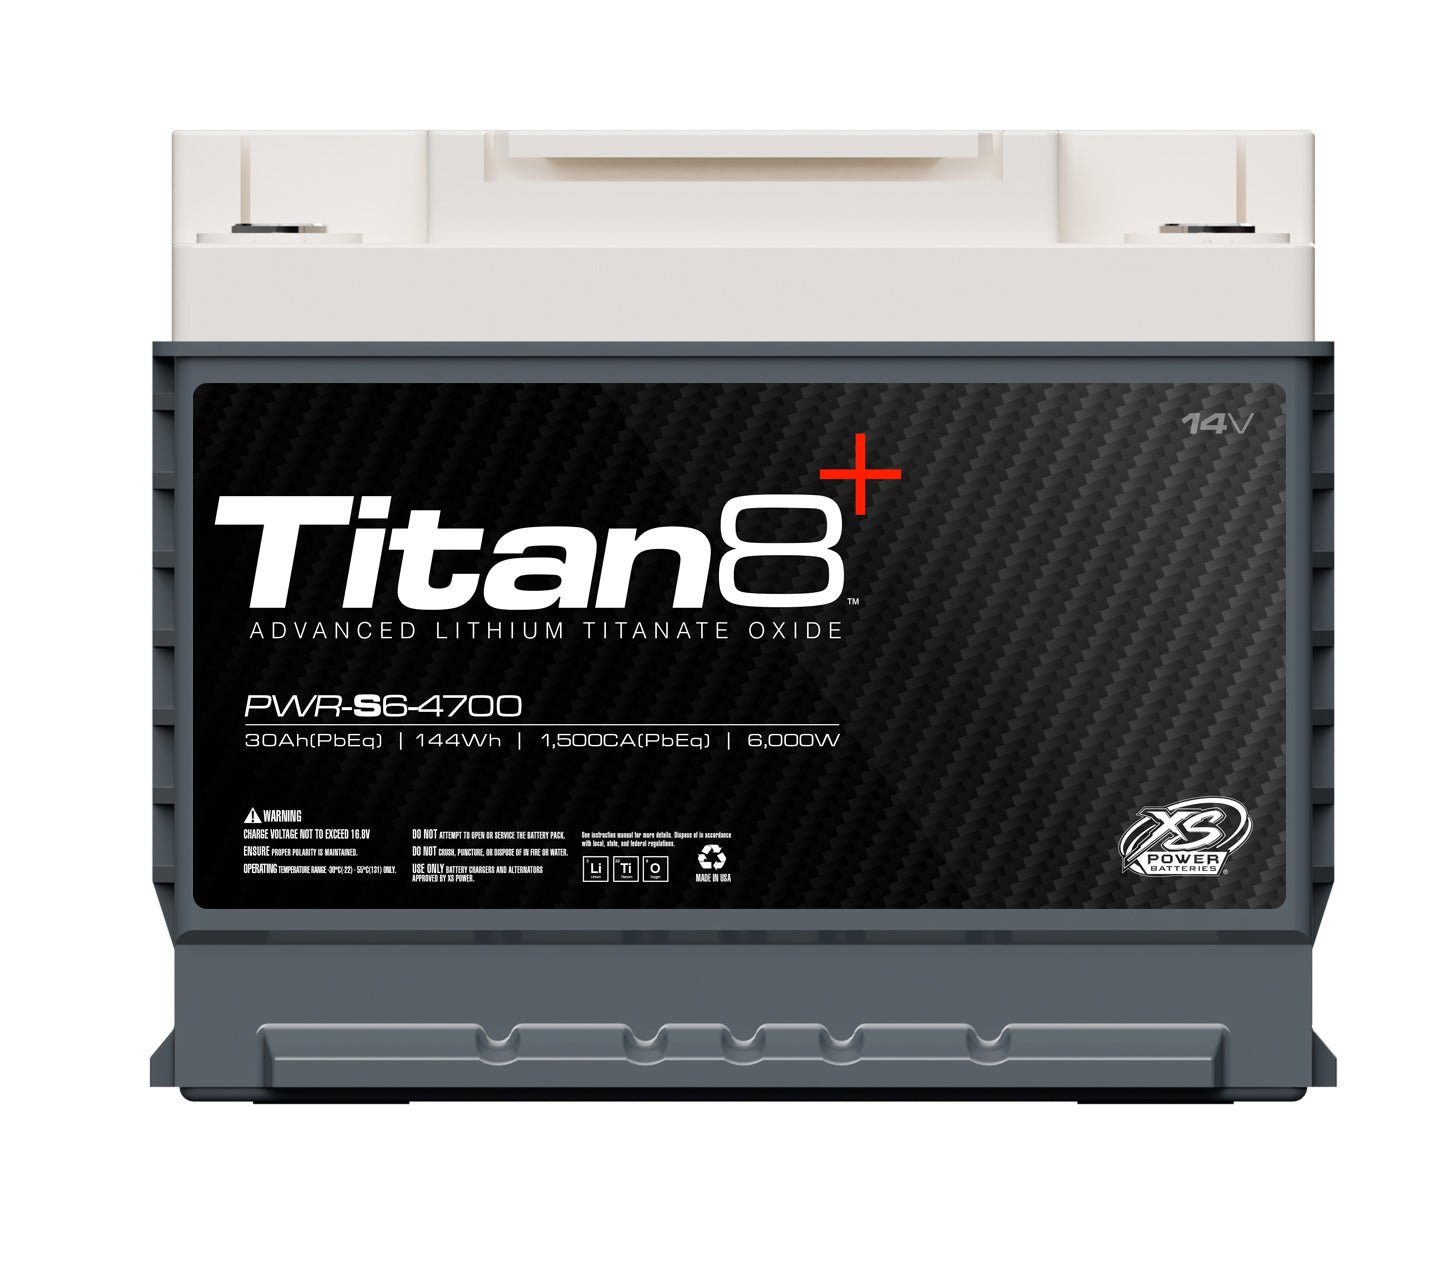 PWR-S6-4700 XS Power Titan8 14VDC Group 47 Lithium LTO Car Audio Vehicle Battery 5000W 144Wh